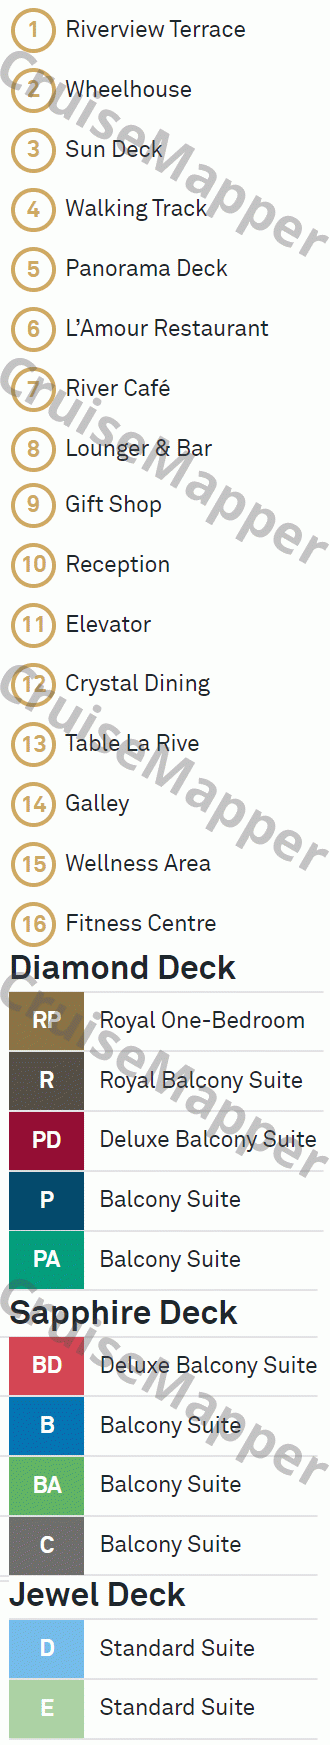 Scenic Gem deck 3 plan (Diamond-Lobby-Lounge) legend